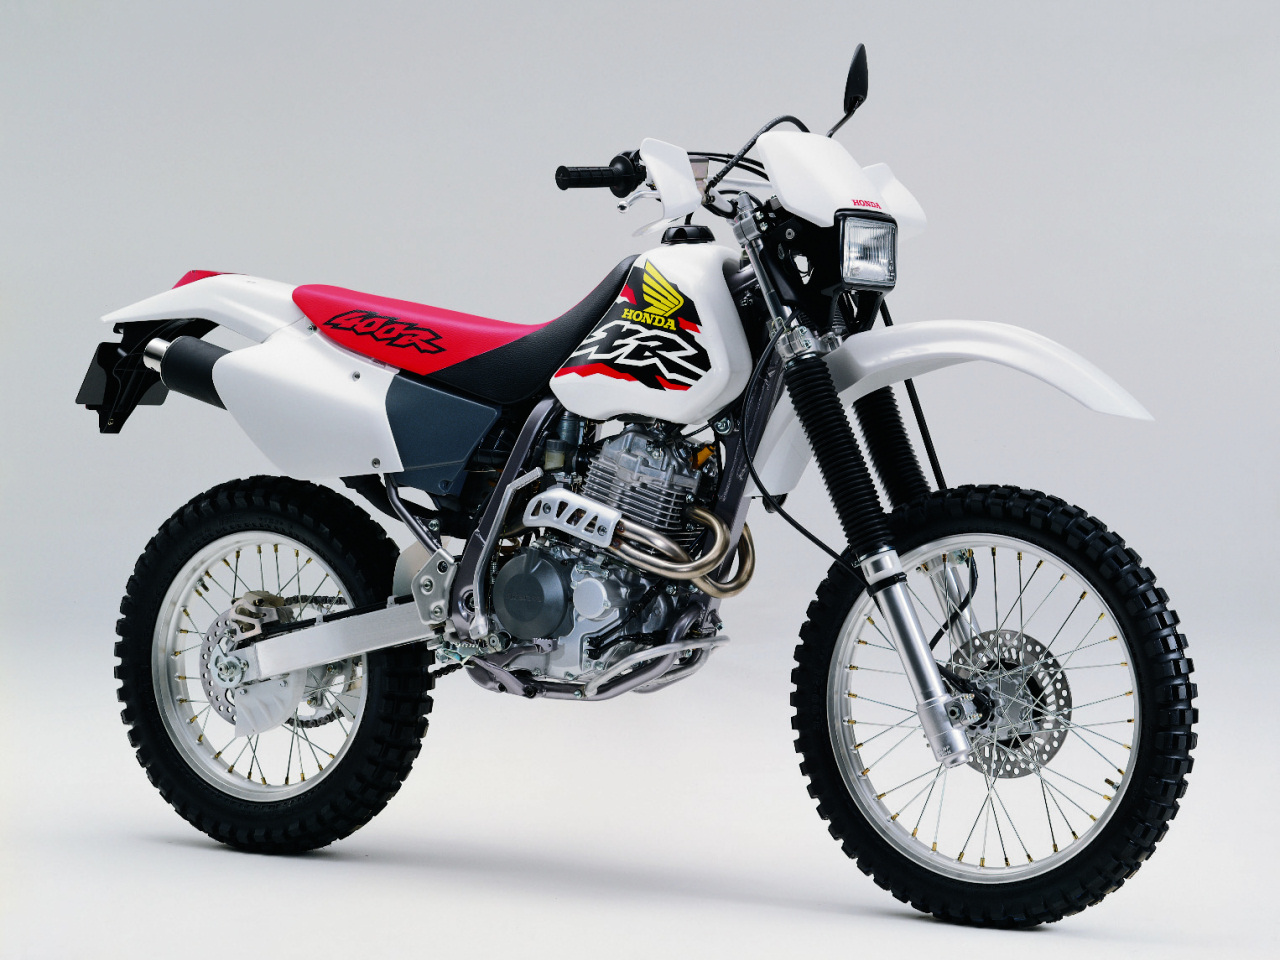 Moto Honda XR 400 R - 1999 - R$ 8500.0